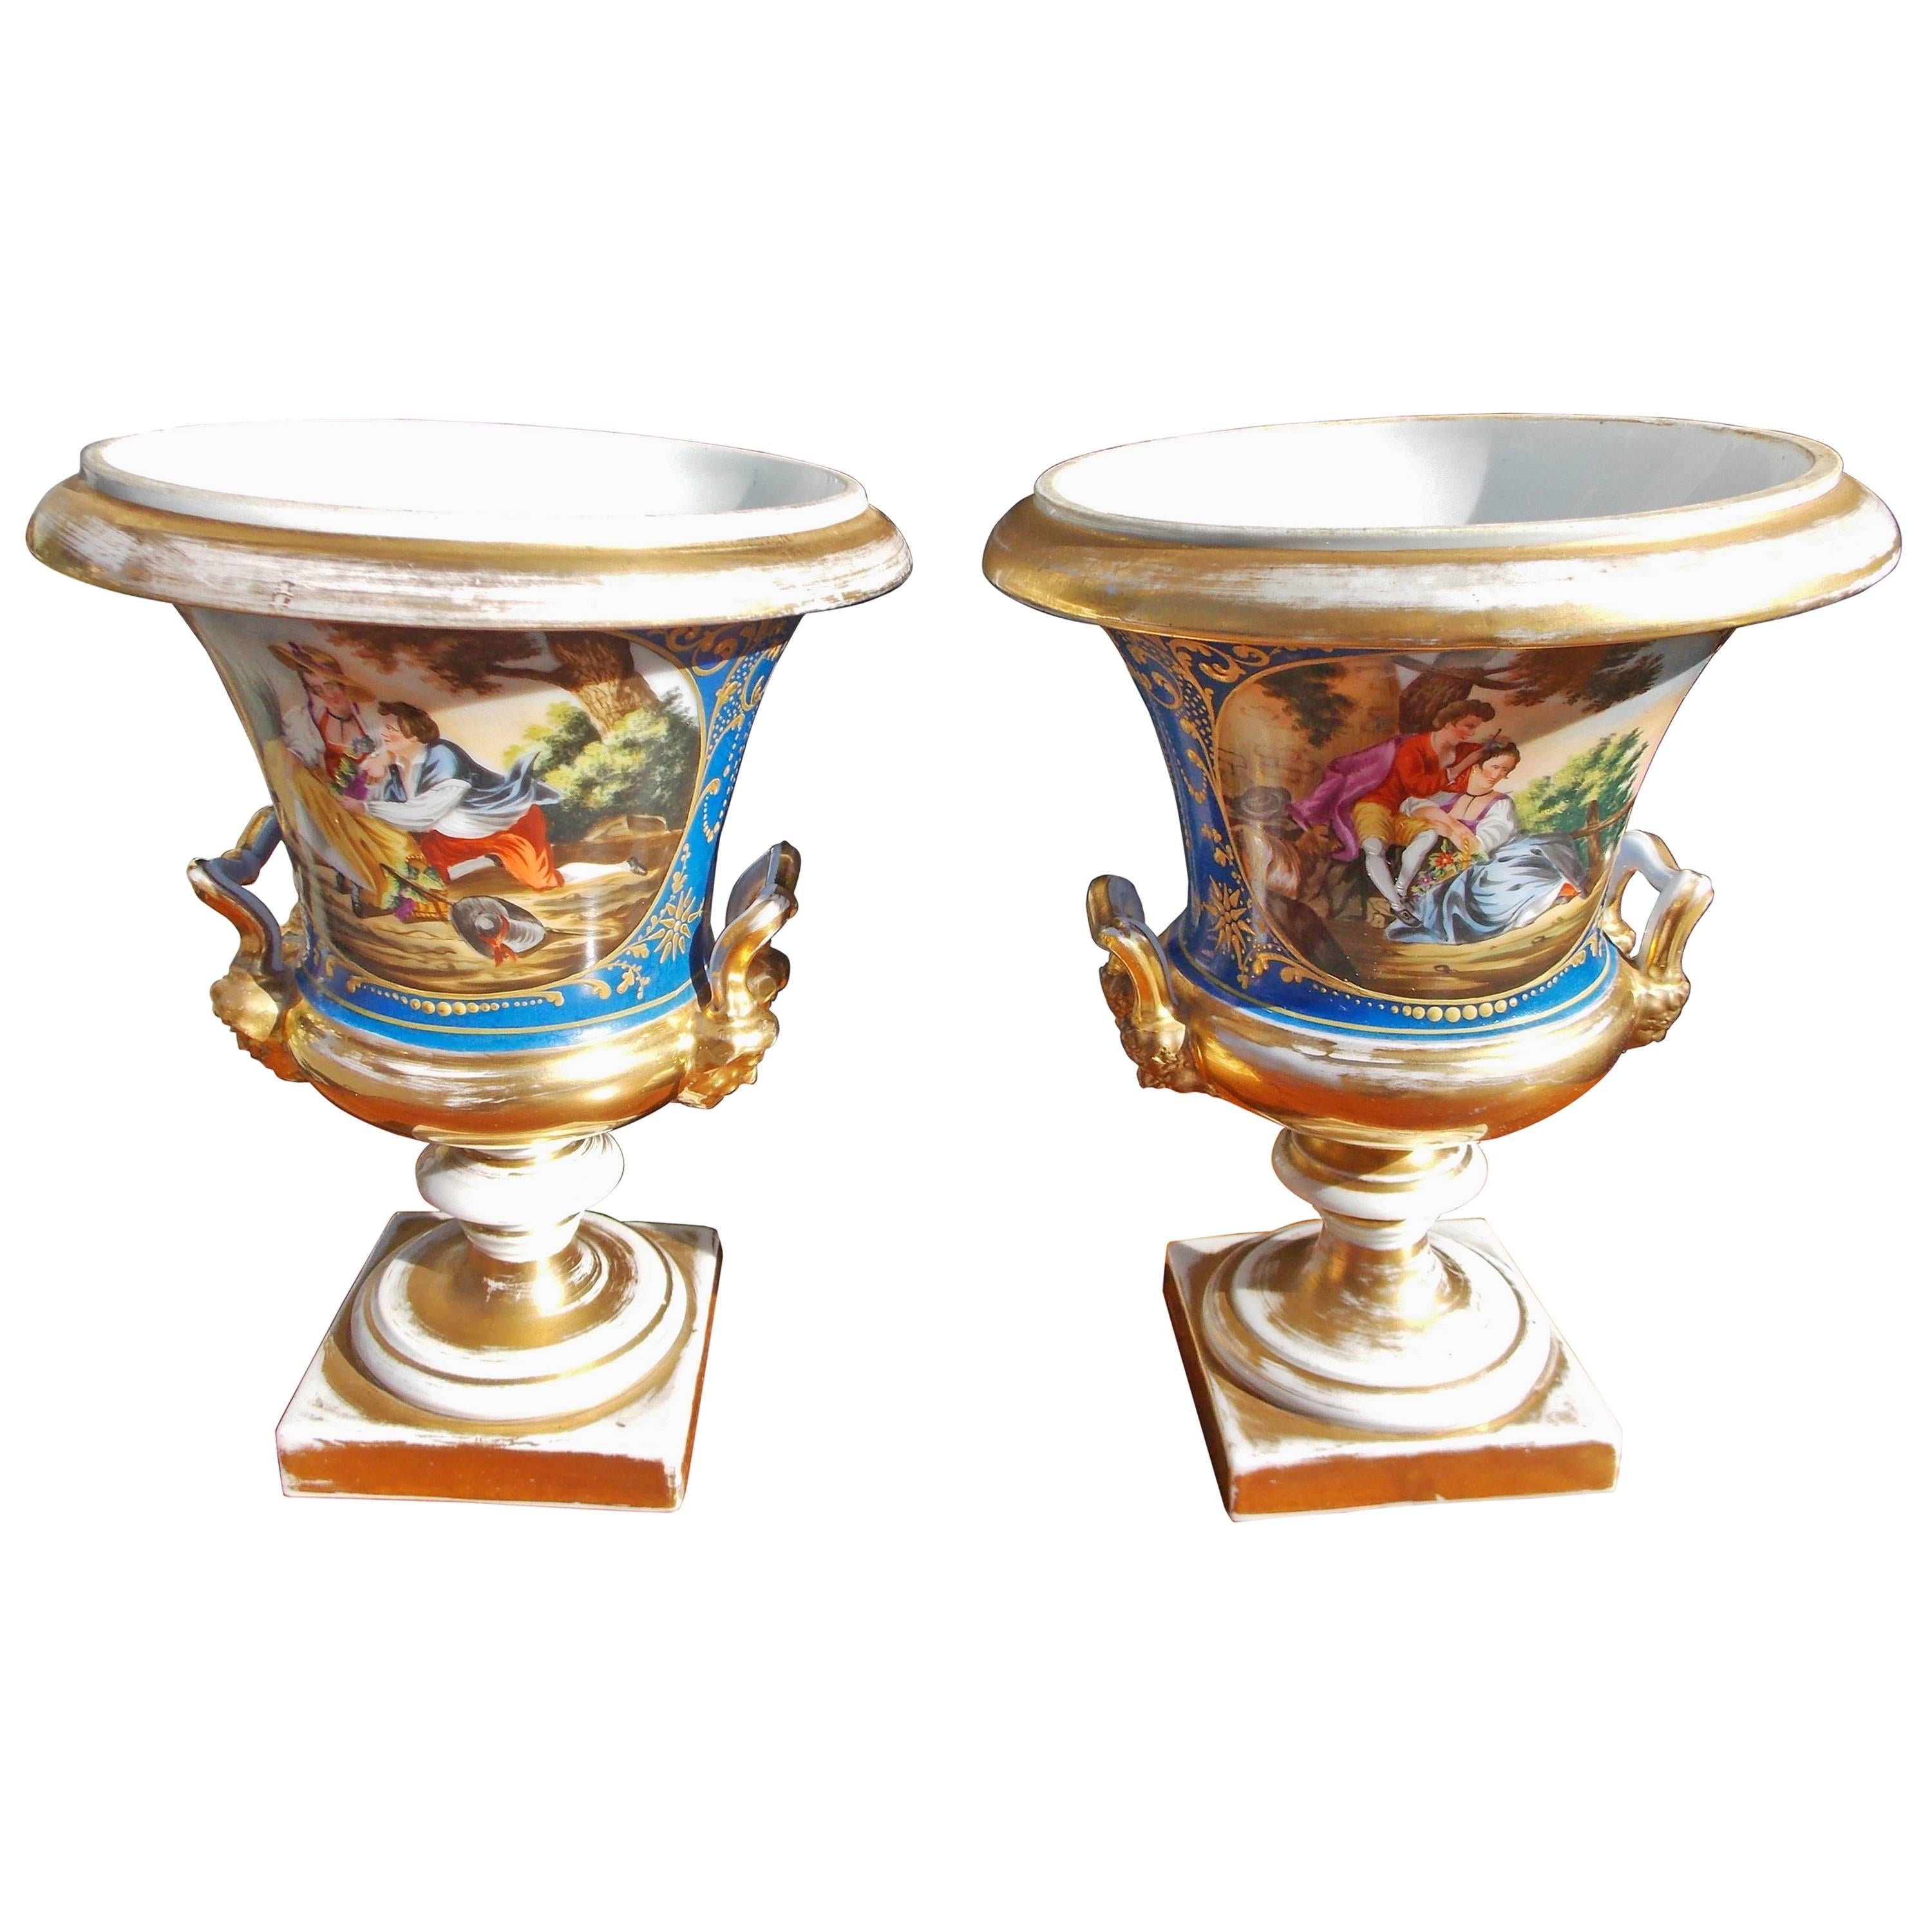  Pair of French Old Paris Gilt & Cobalt Blue Porcelain Mantel Urns, Circa 1820